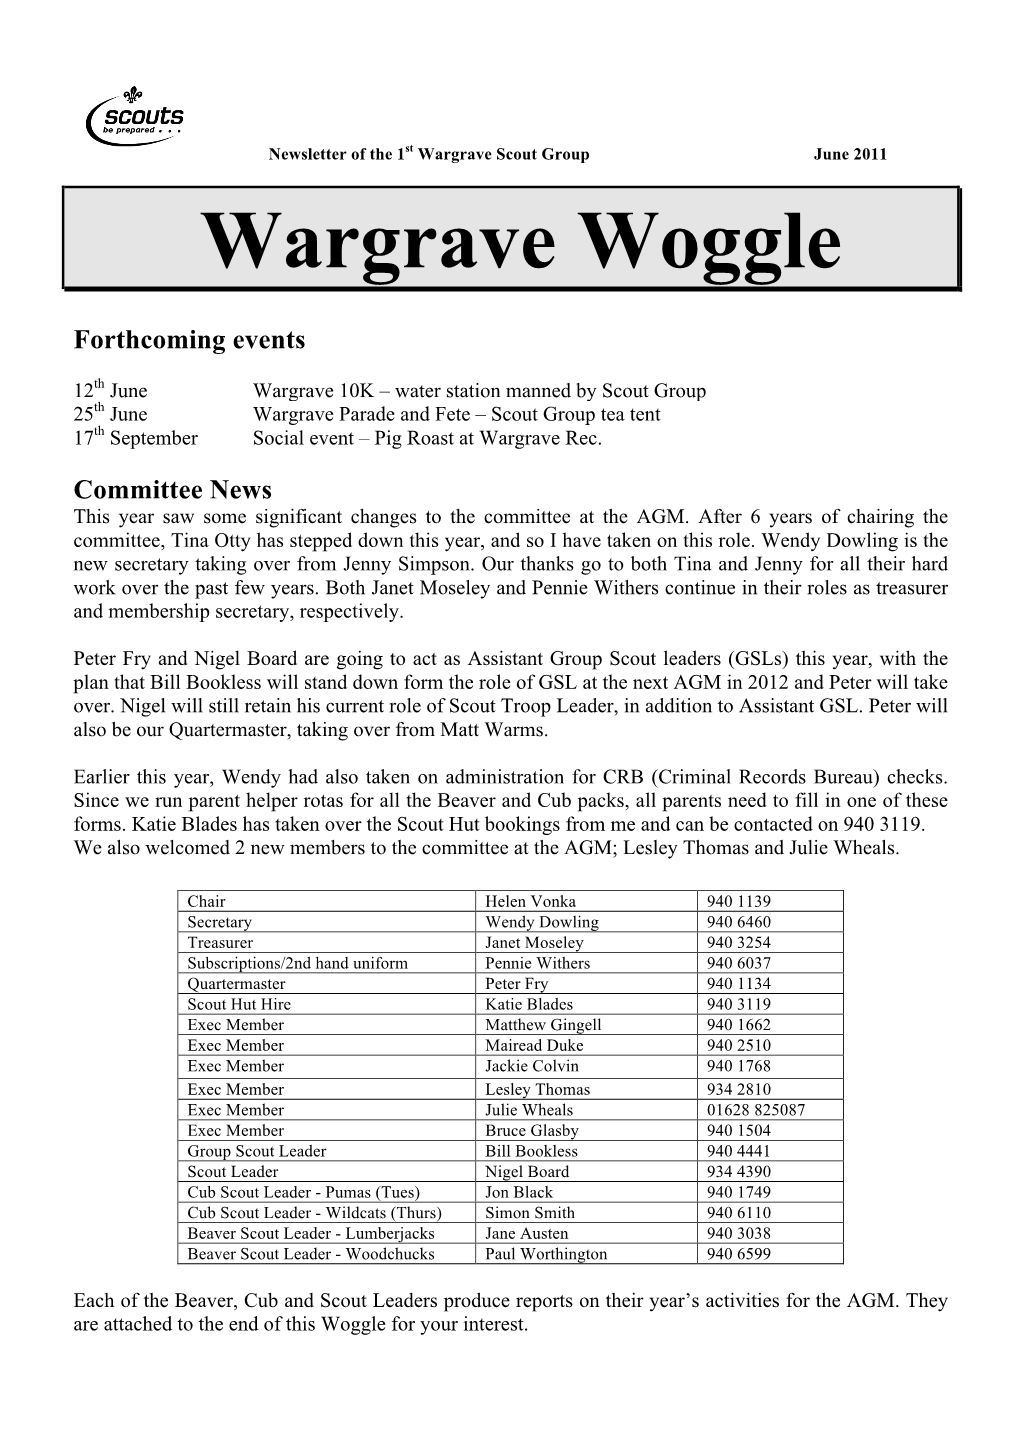 Wargrave Woggle